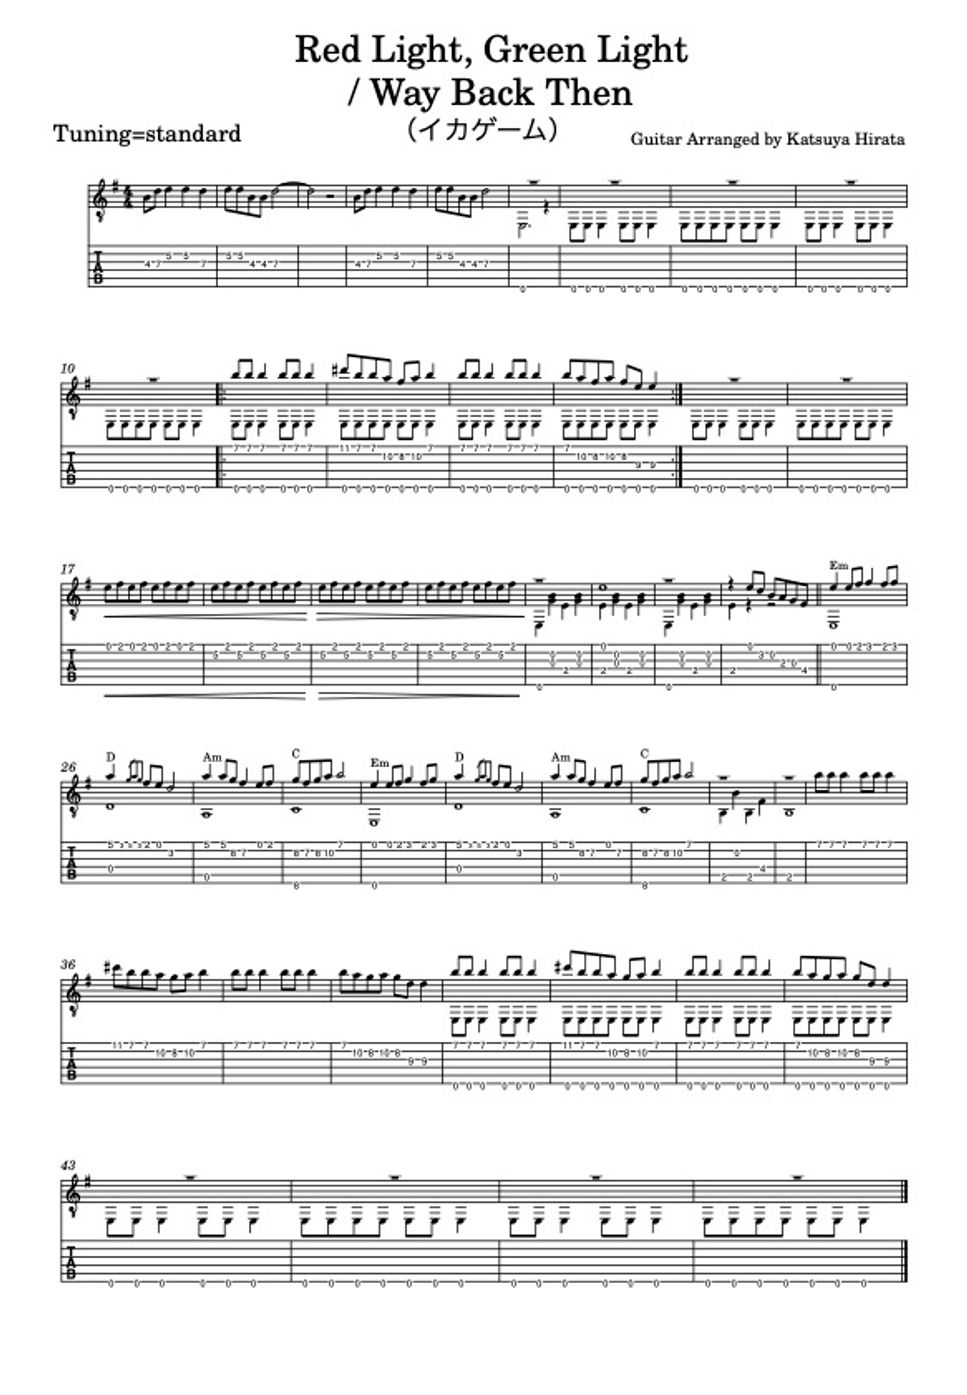 Squid Game - Way Back Then (Fingerstyle Guitar) by Katsuya Hirata